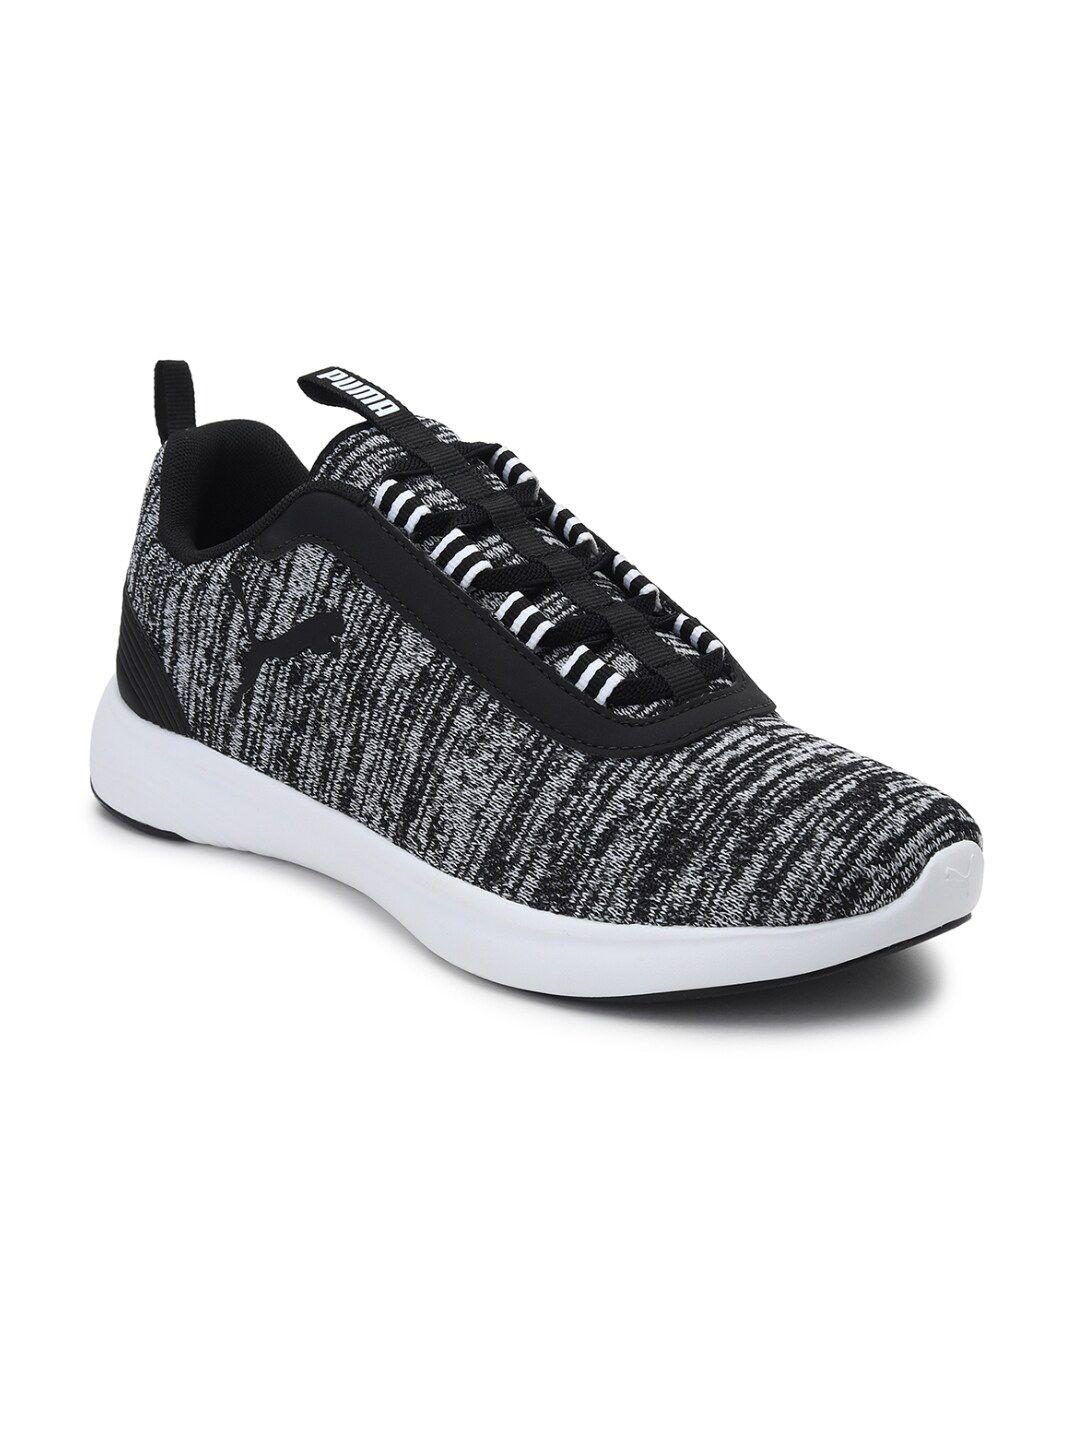 Puma Unisex Black Textile Softride Vital Walking Shoes